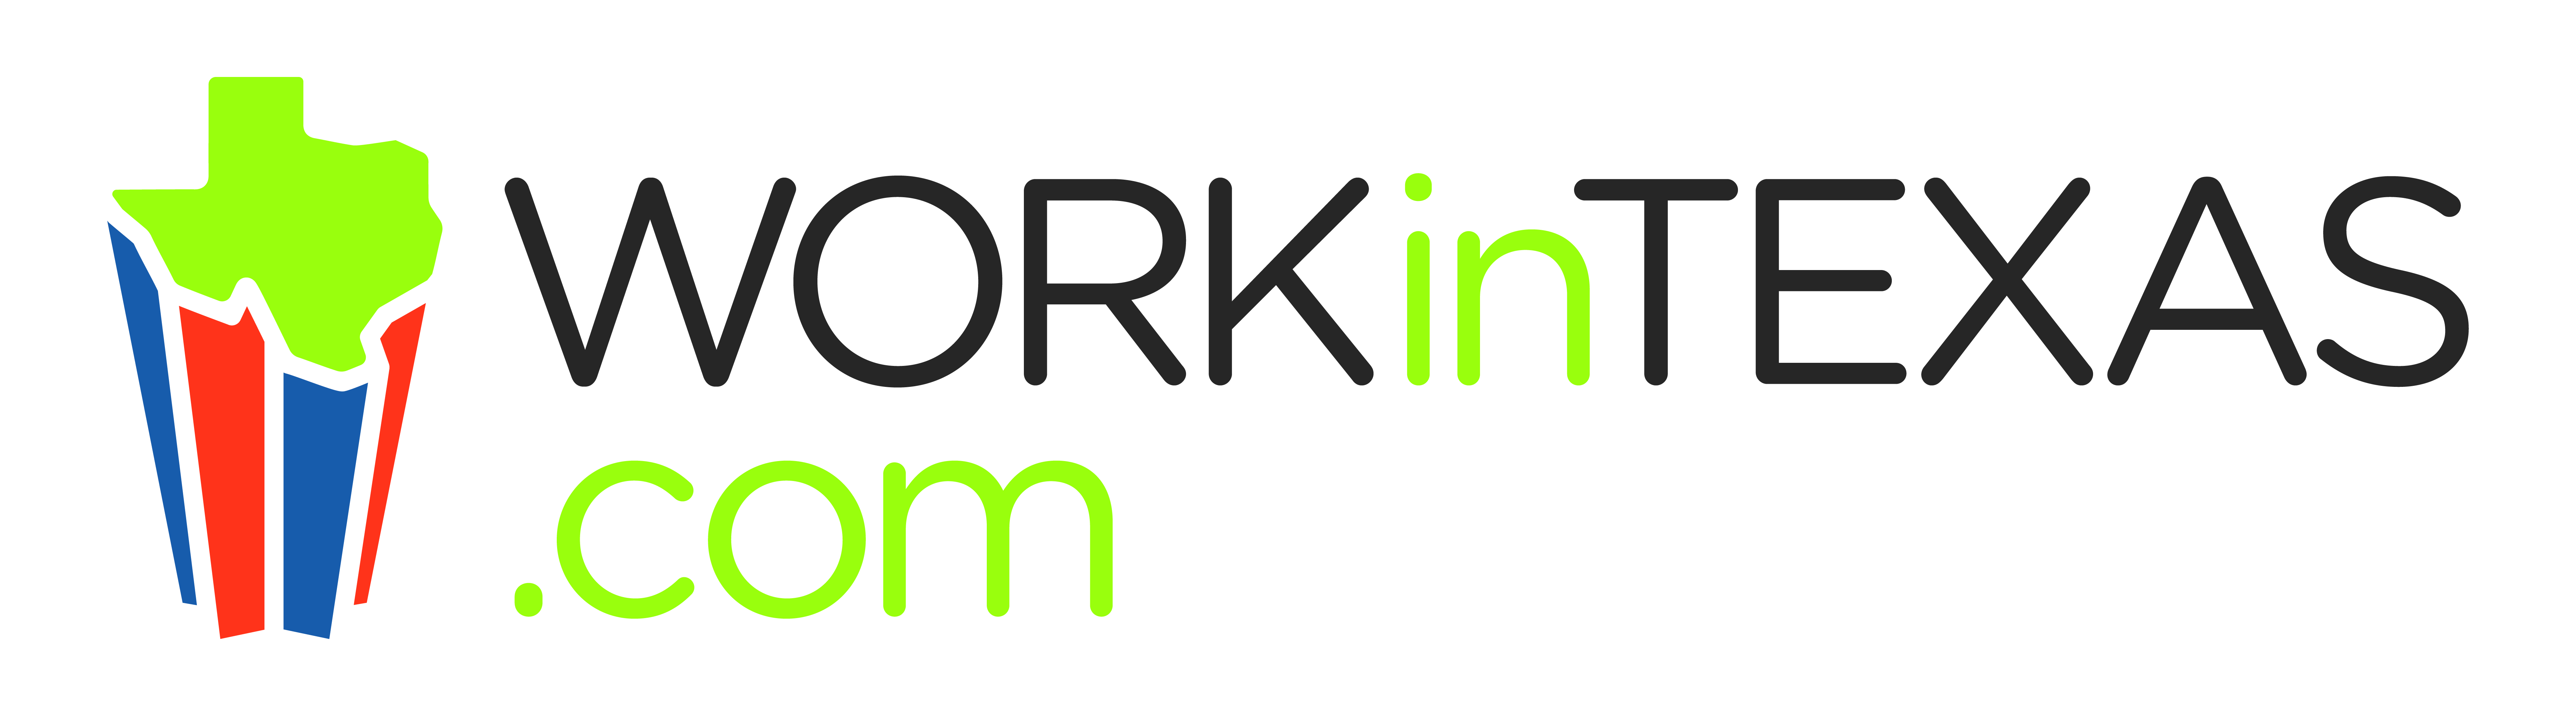 WorkInTexas.com - Workforce Solutions